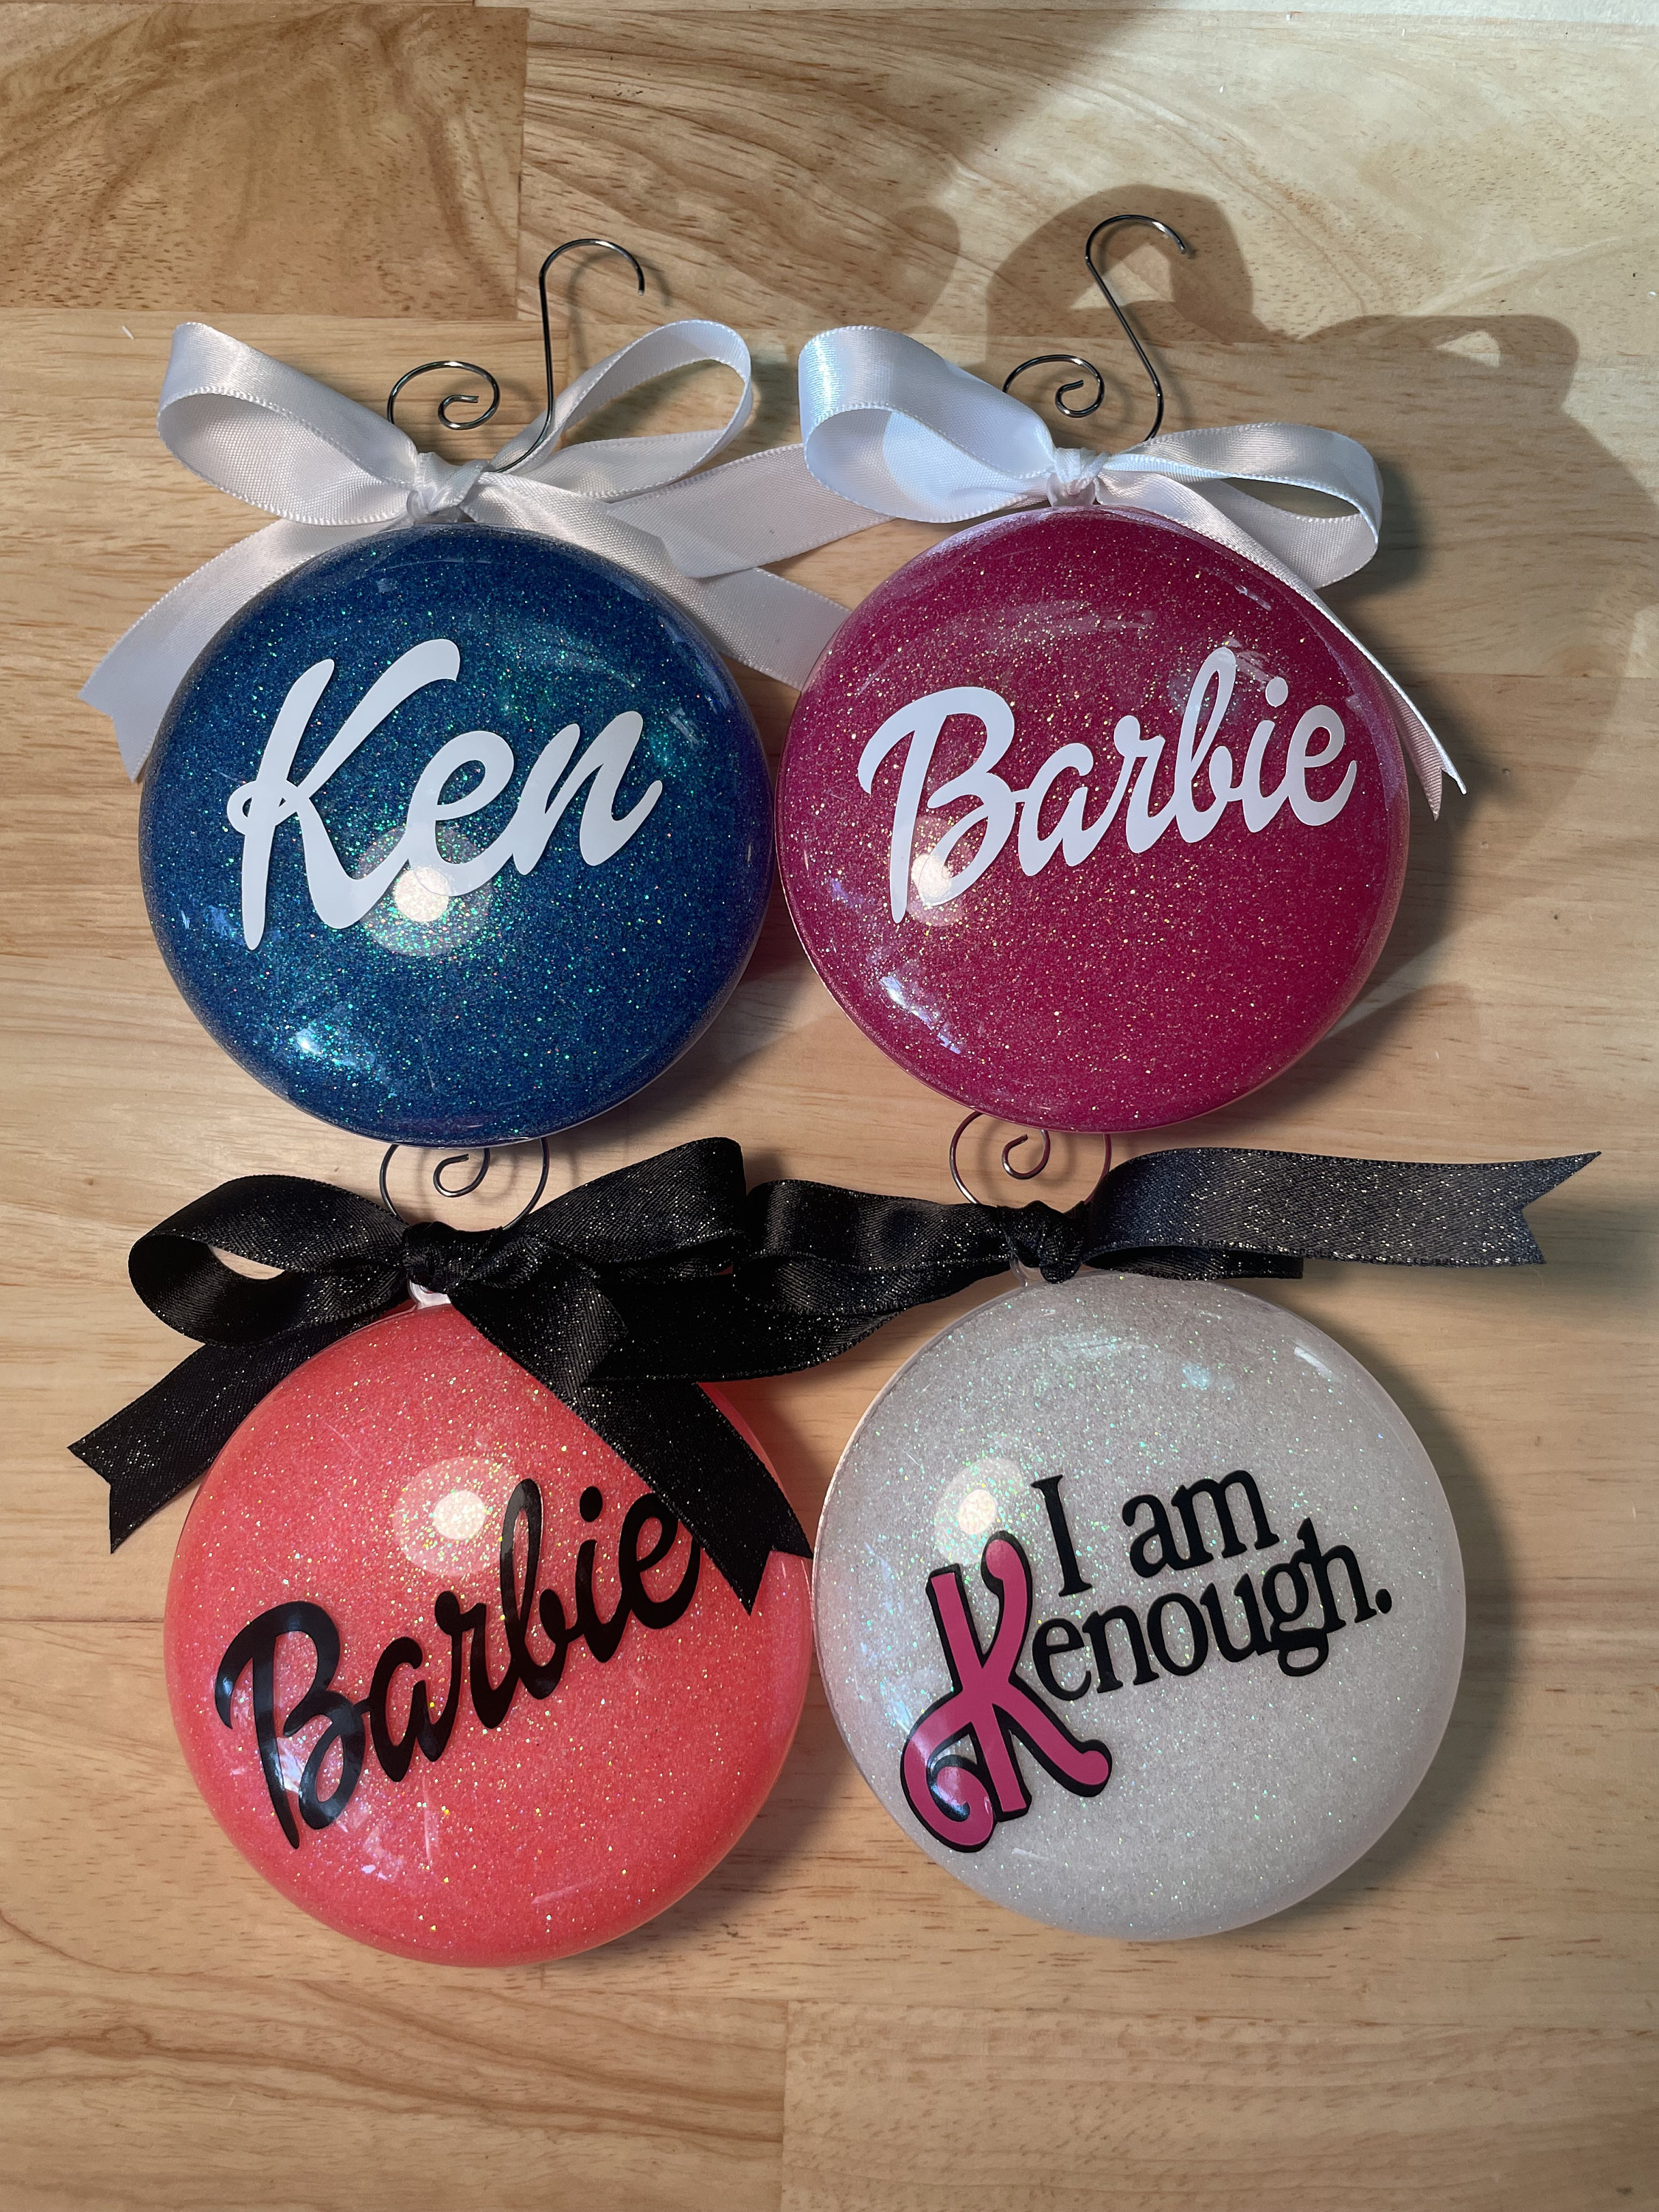 Barbie Girl Charm Bracelet – I Am Kenough, We Girls Can Do Anything!